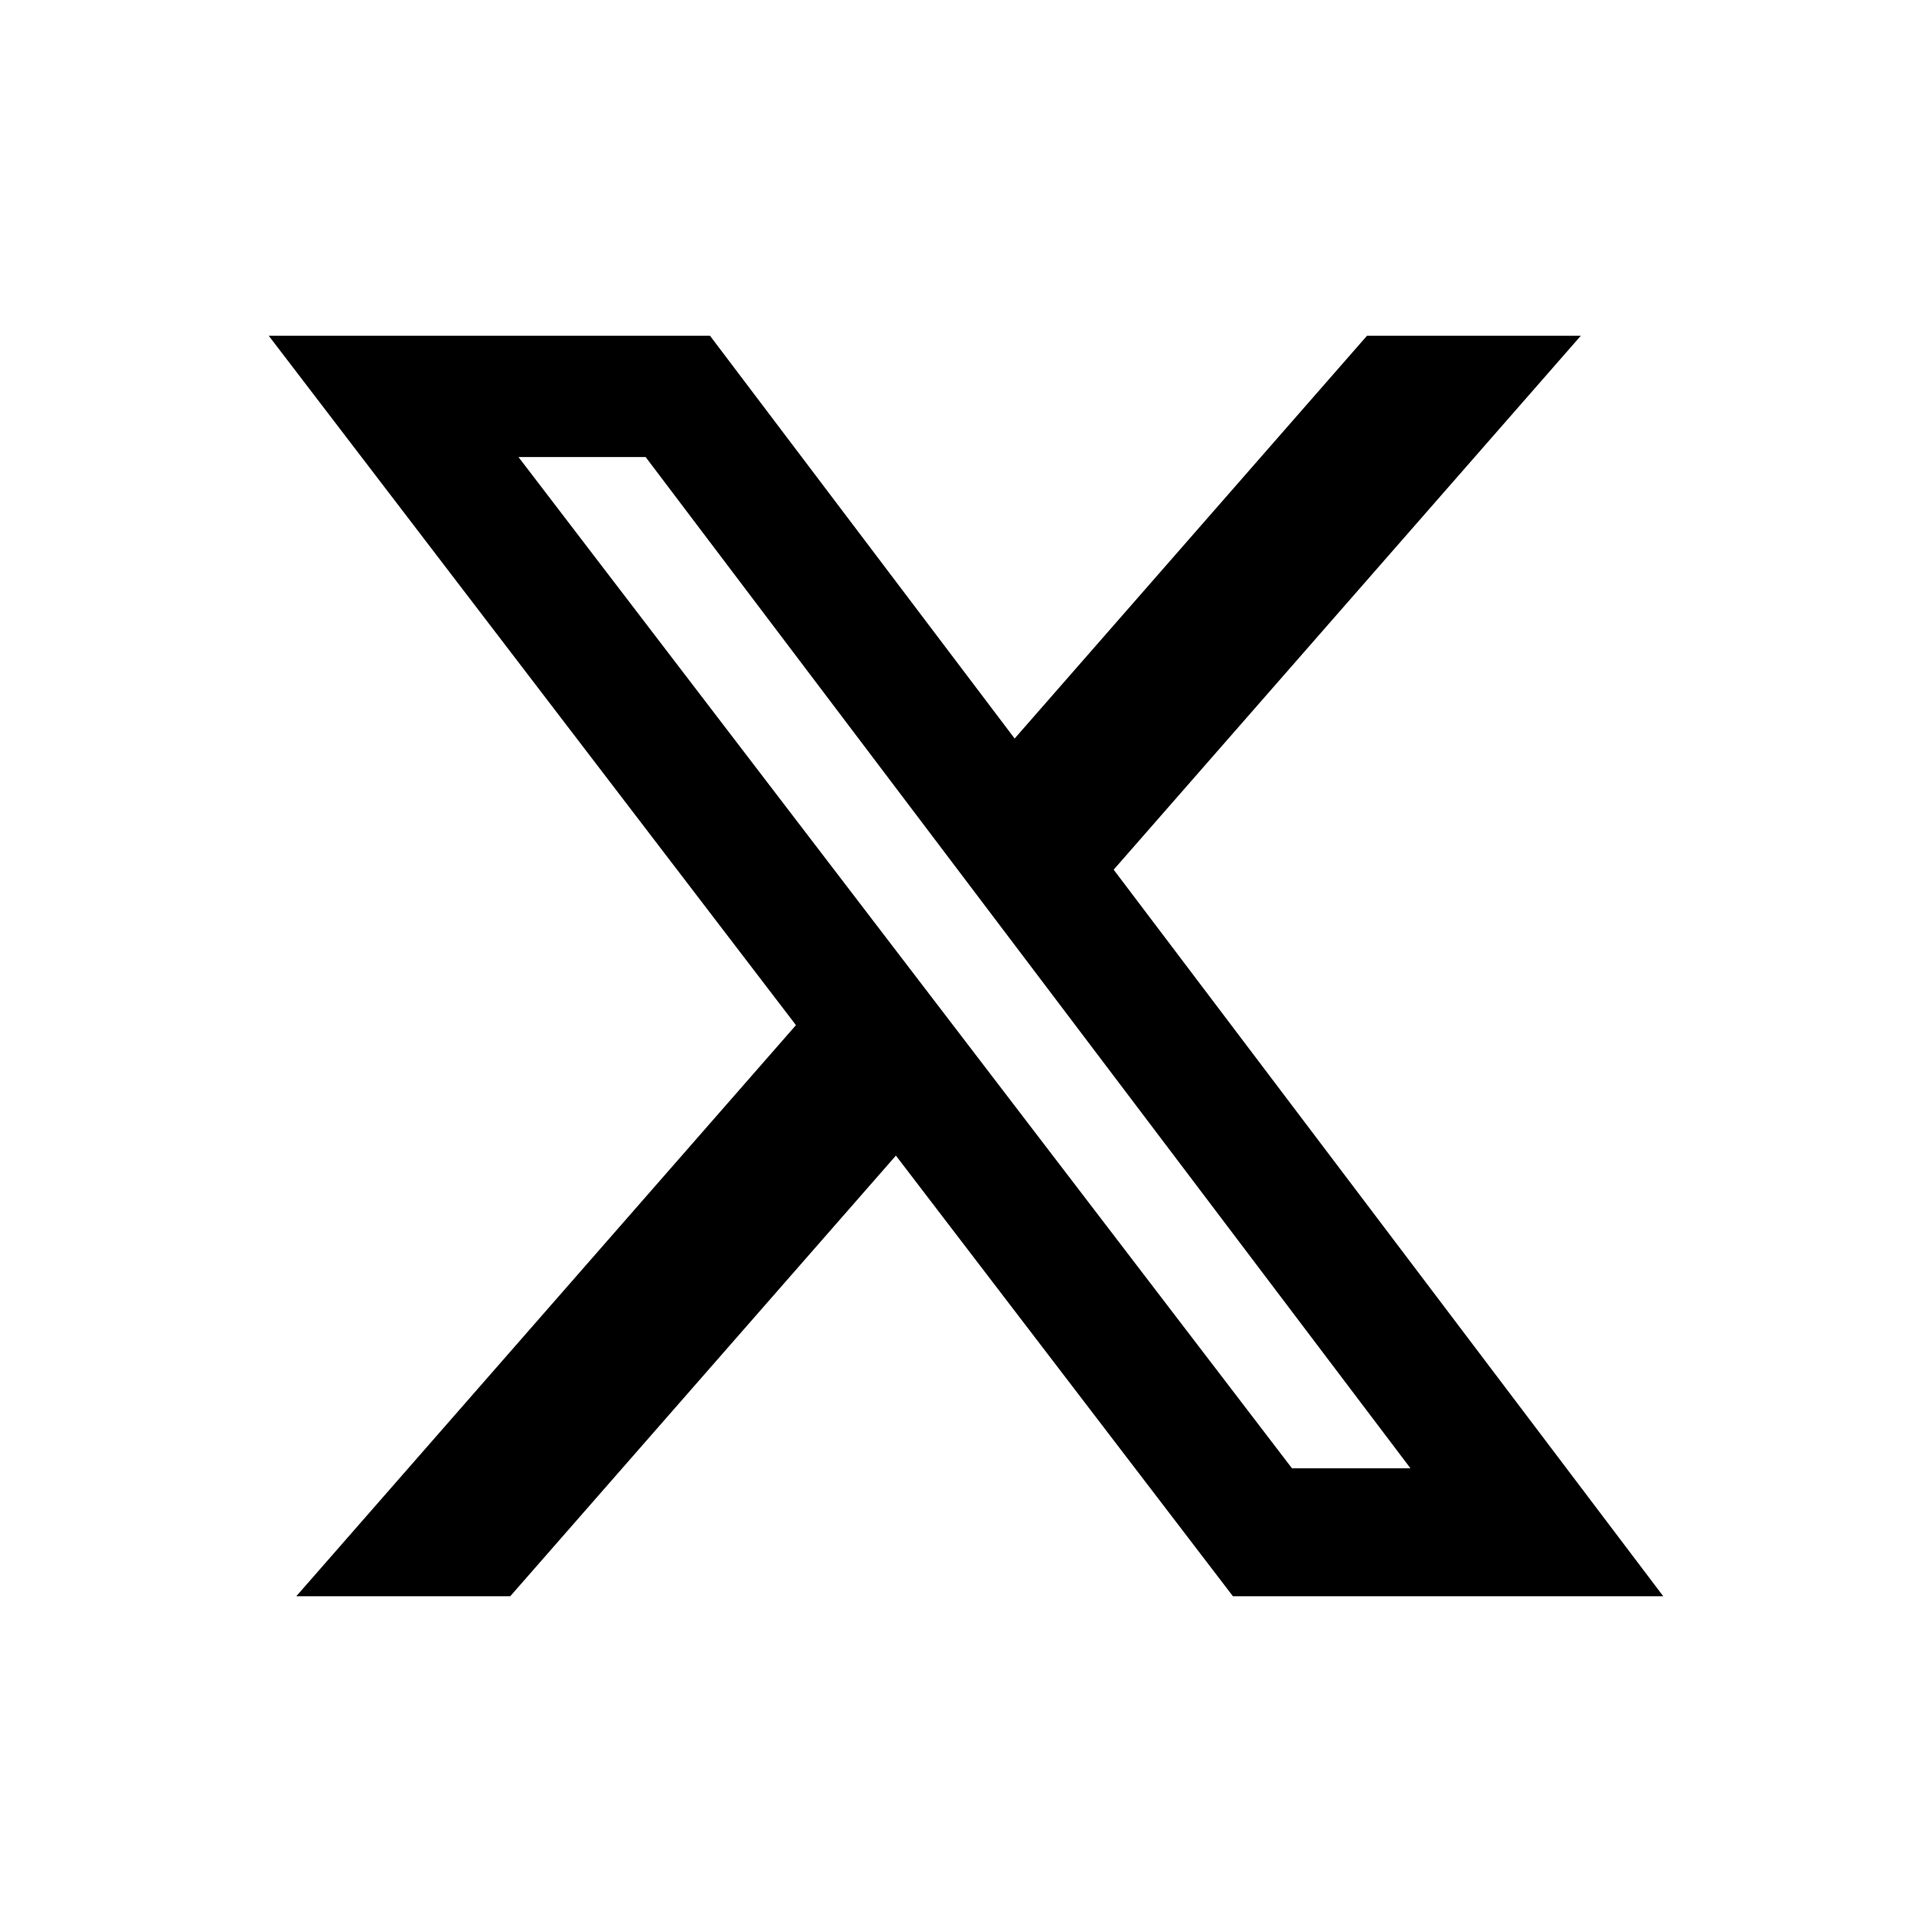 x corp logo 0 - X Corp Logo